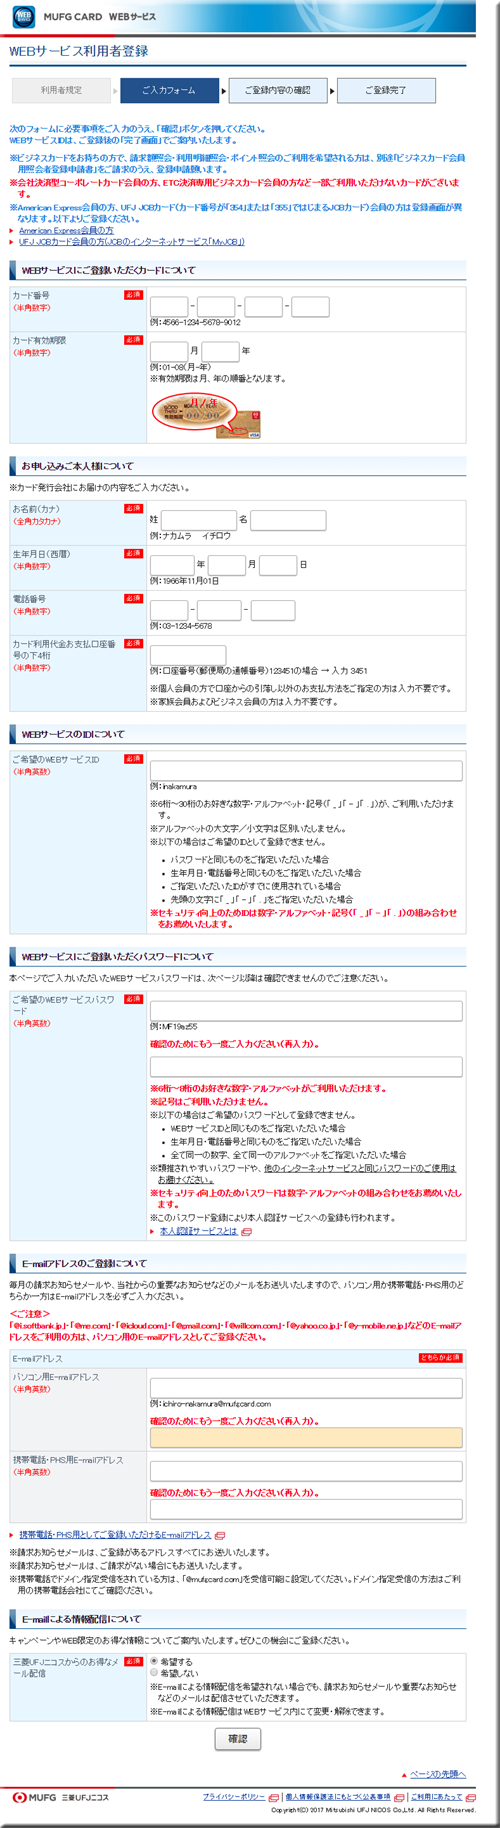 MUFG カード 三菱UFJニコス フィッシングメール フィッシングサイト 偽メール 偽サイト 詐欺